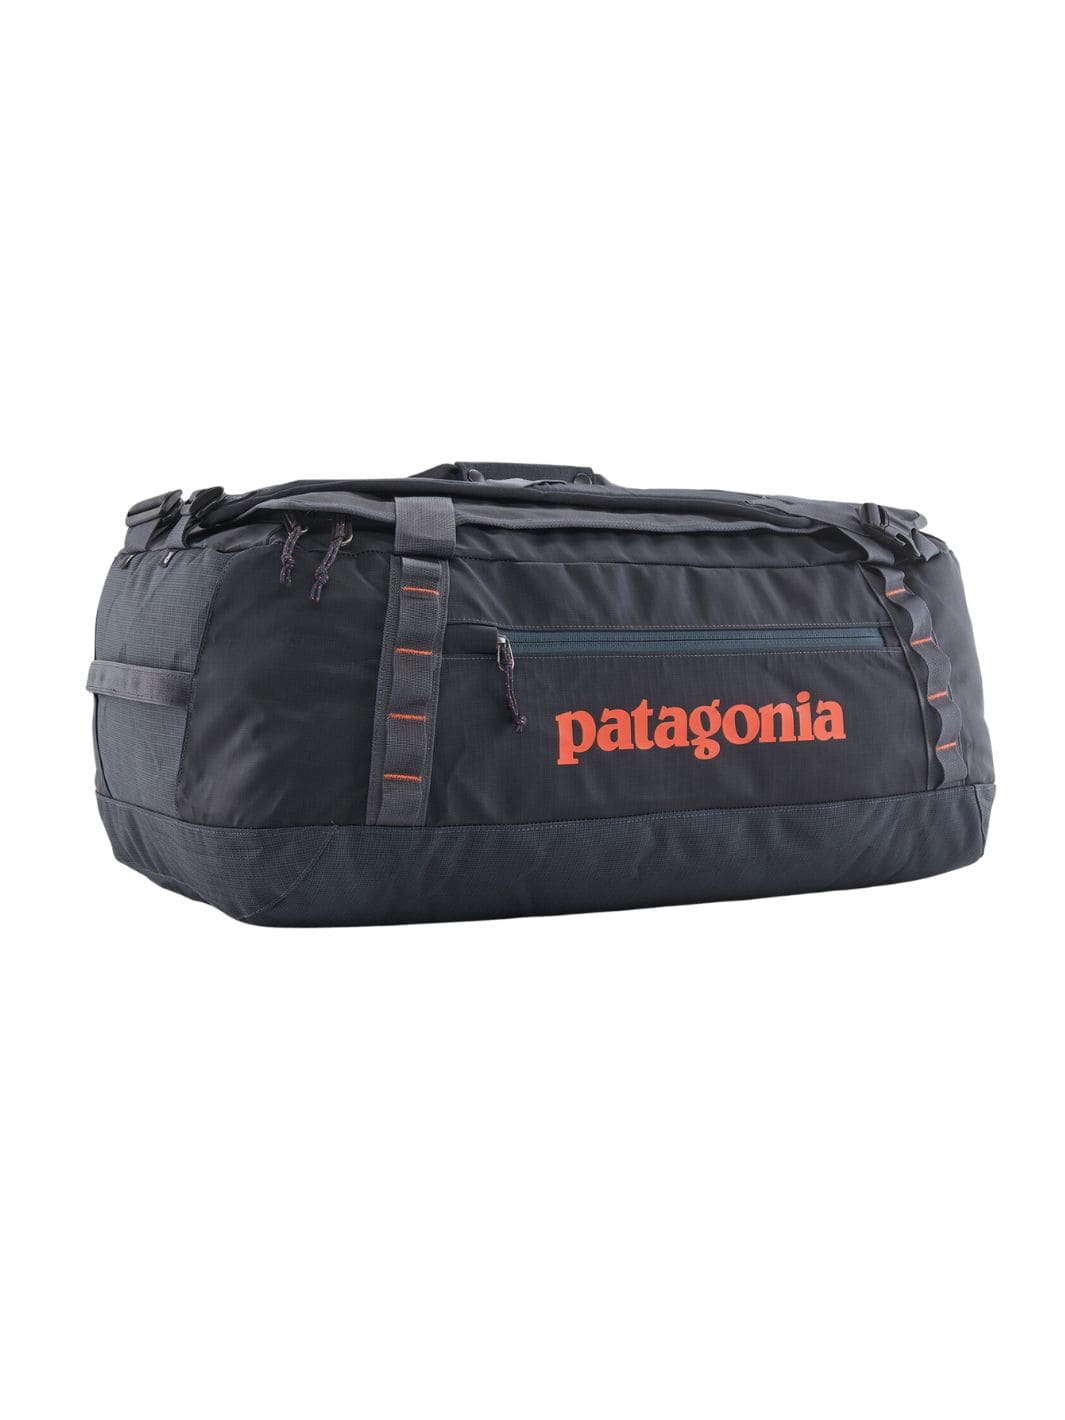 Patagonia Accessories Bag | Black Hole Duffel Smolder Blue 55L